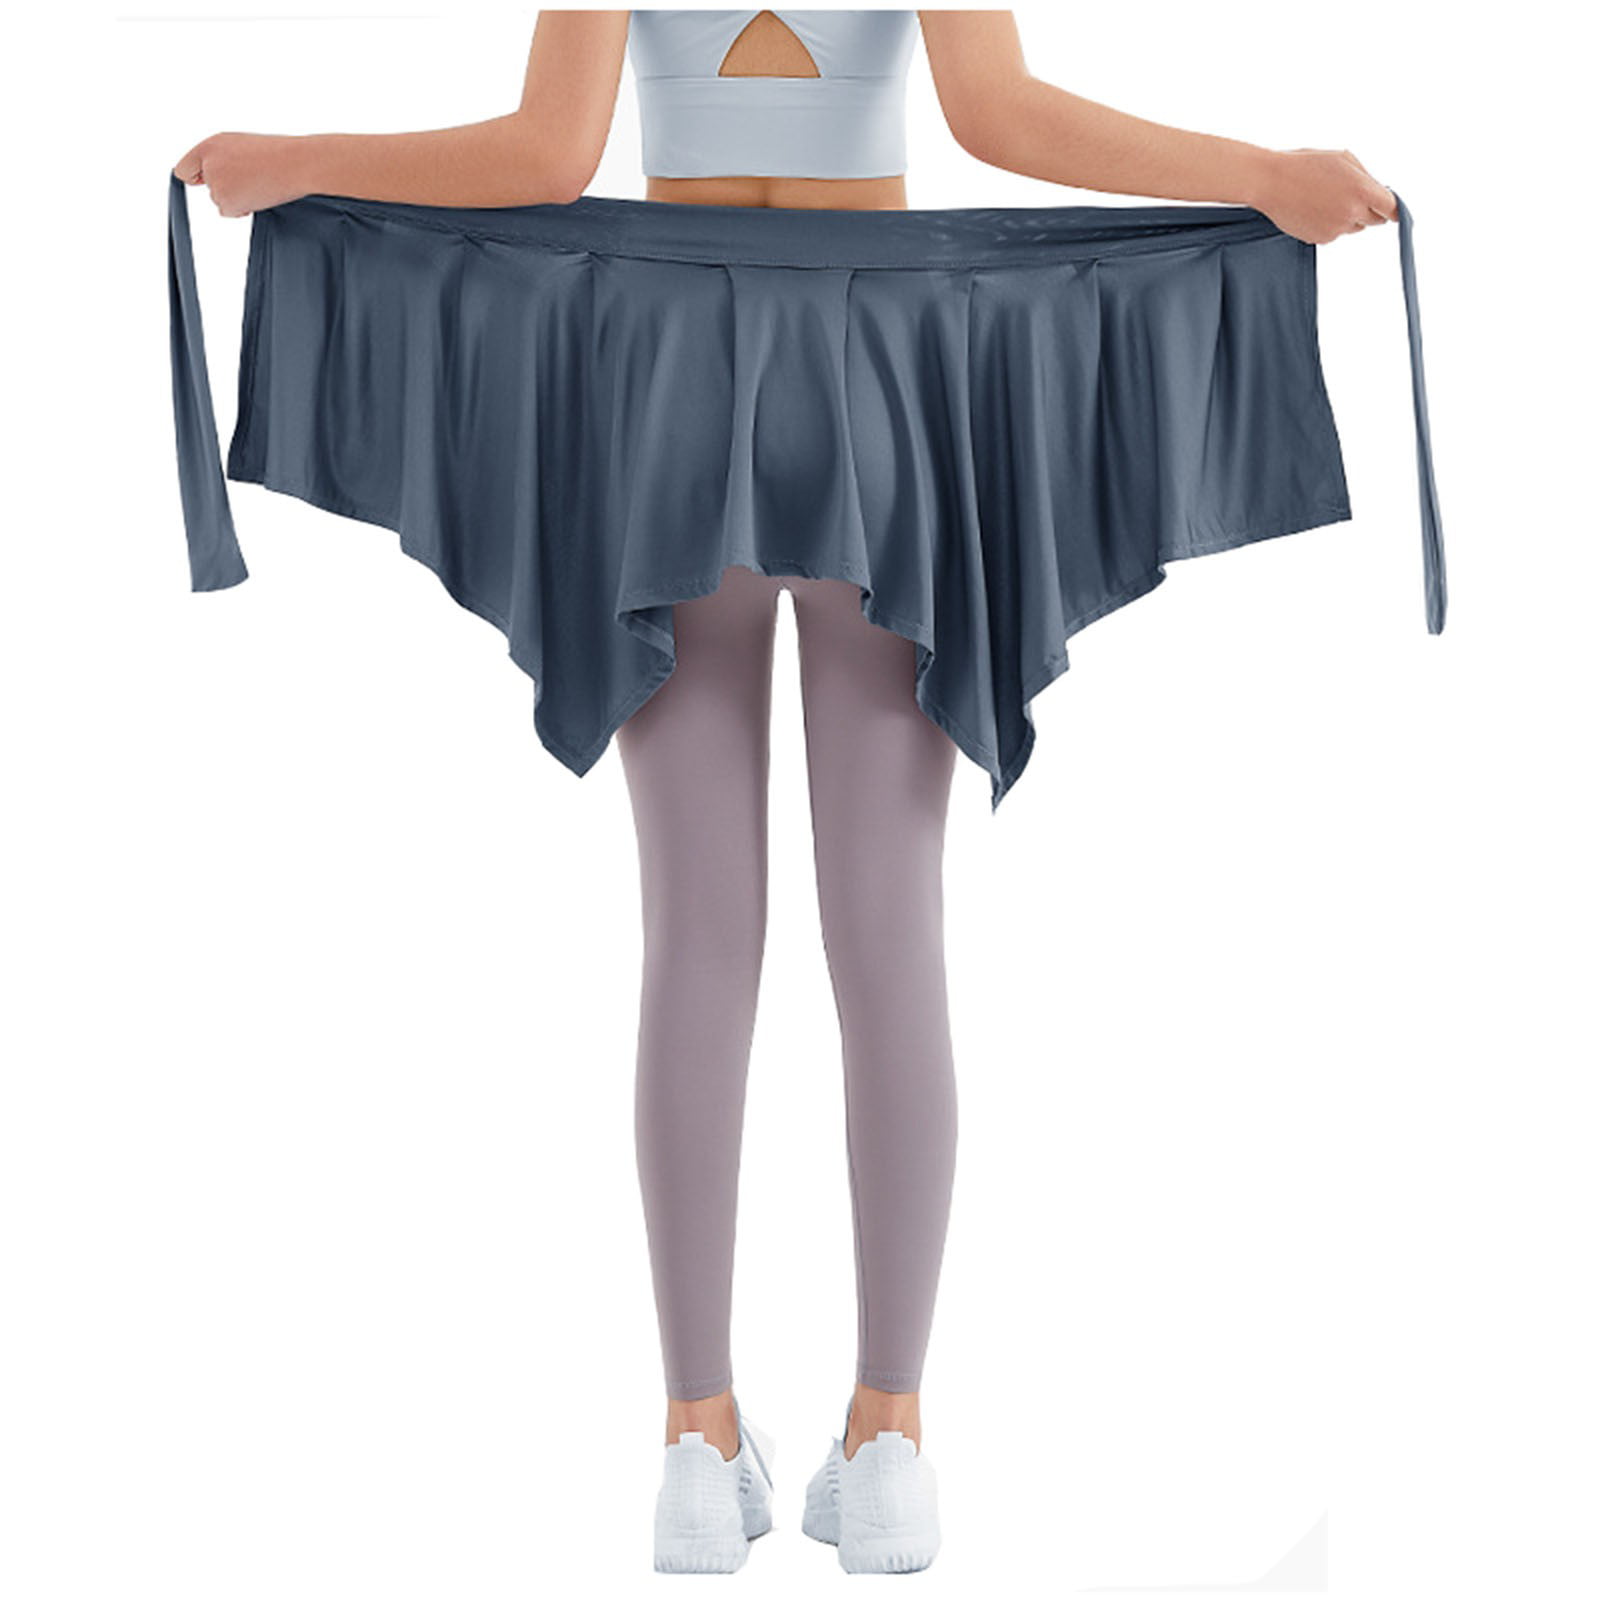 Skirt with A Hip-Covering Scarf Dance Skirt Anti-Empty Outer Hip-Hiding Ballet Skirt High Waisted Flowy Skirt Yoga Shorts 